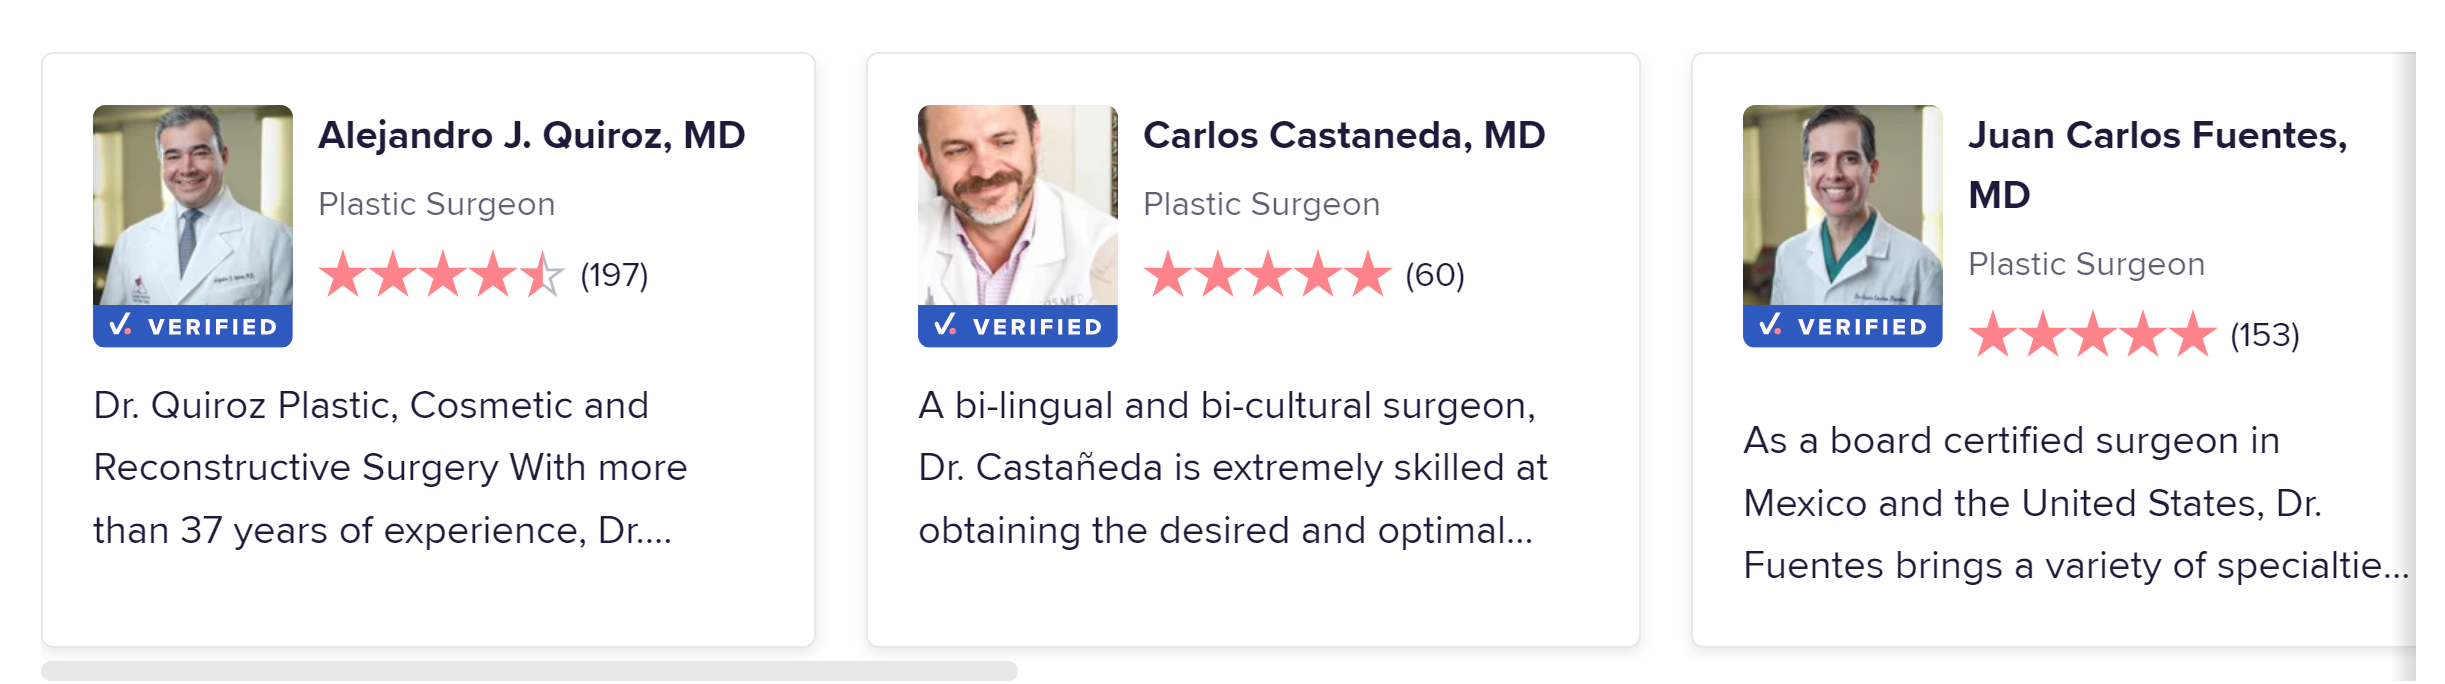 tijuana plastic surgeon reviews